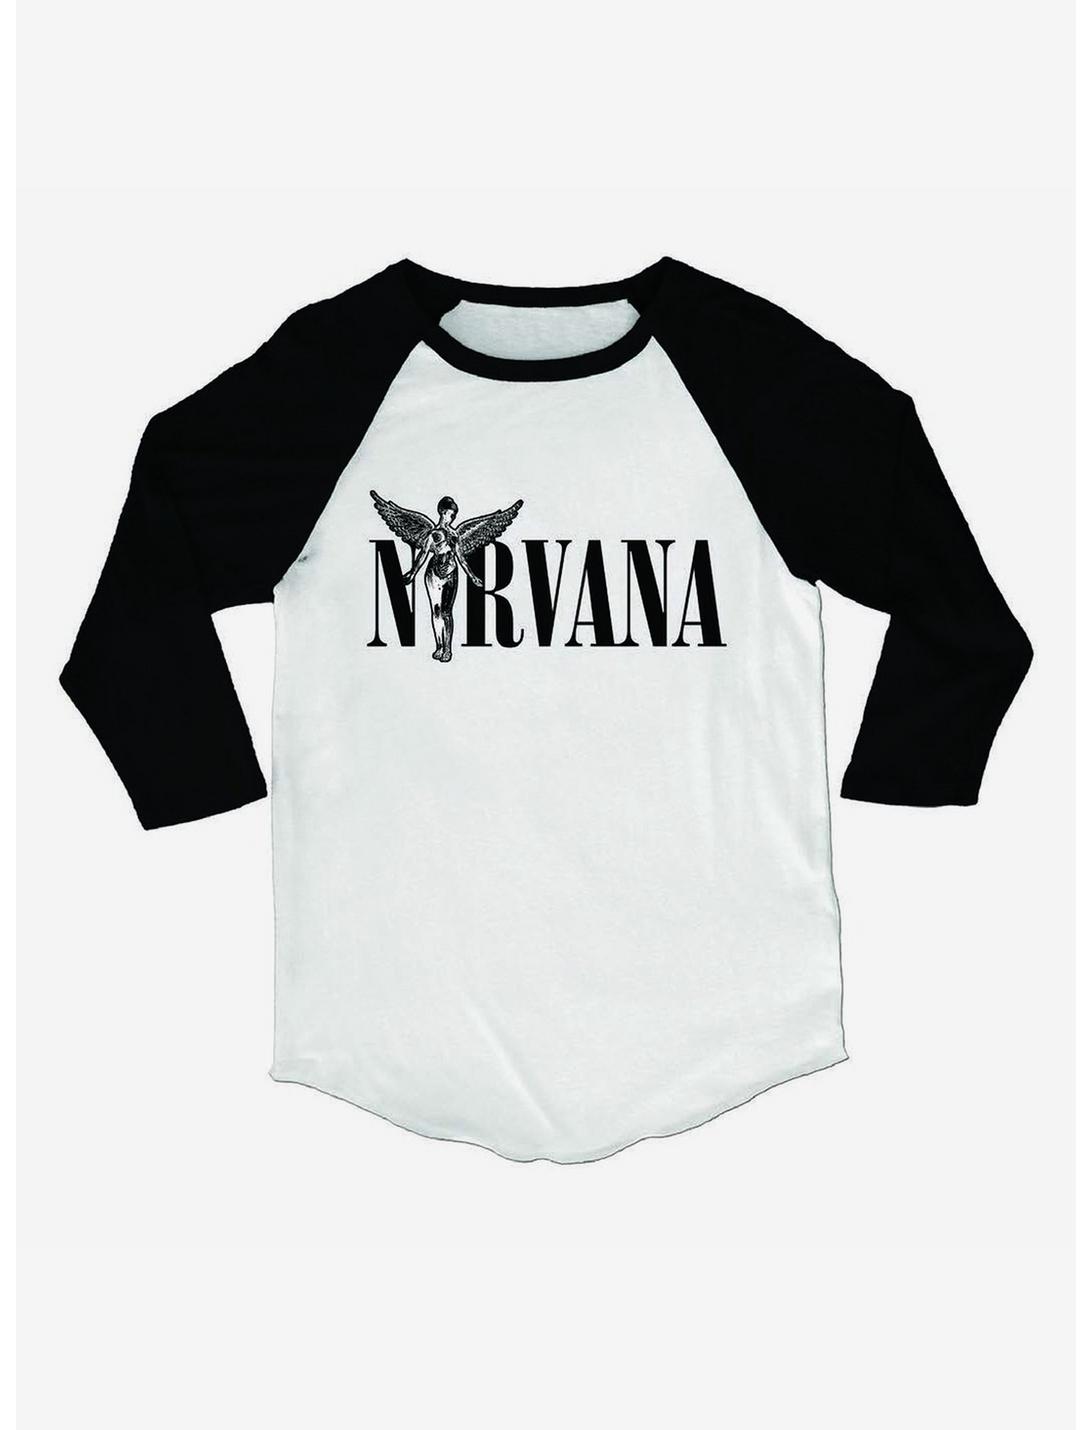 Nirvana In Utero Boyfriend Fit Girls Raglan T-Shirt, BRIGHT WHITE, hi-res